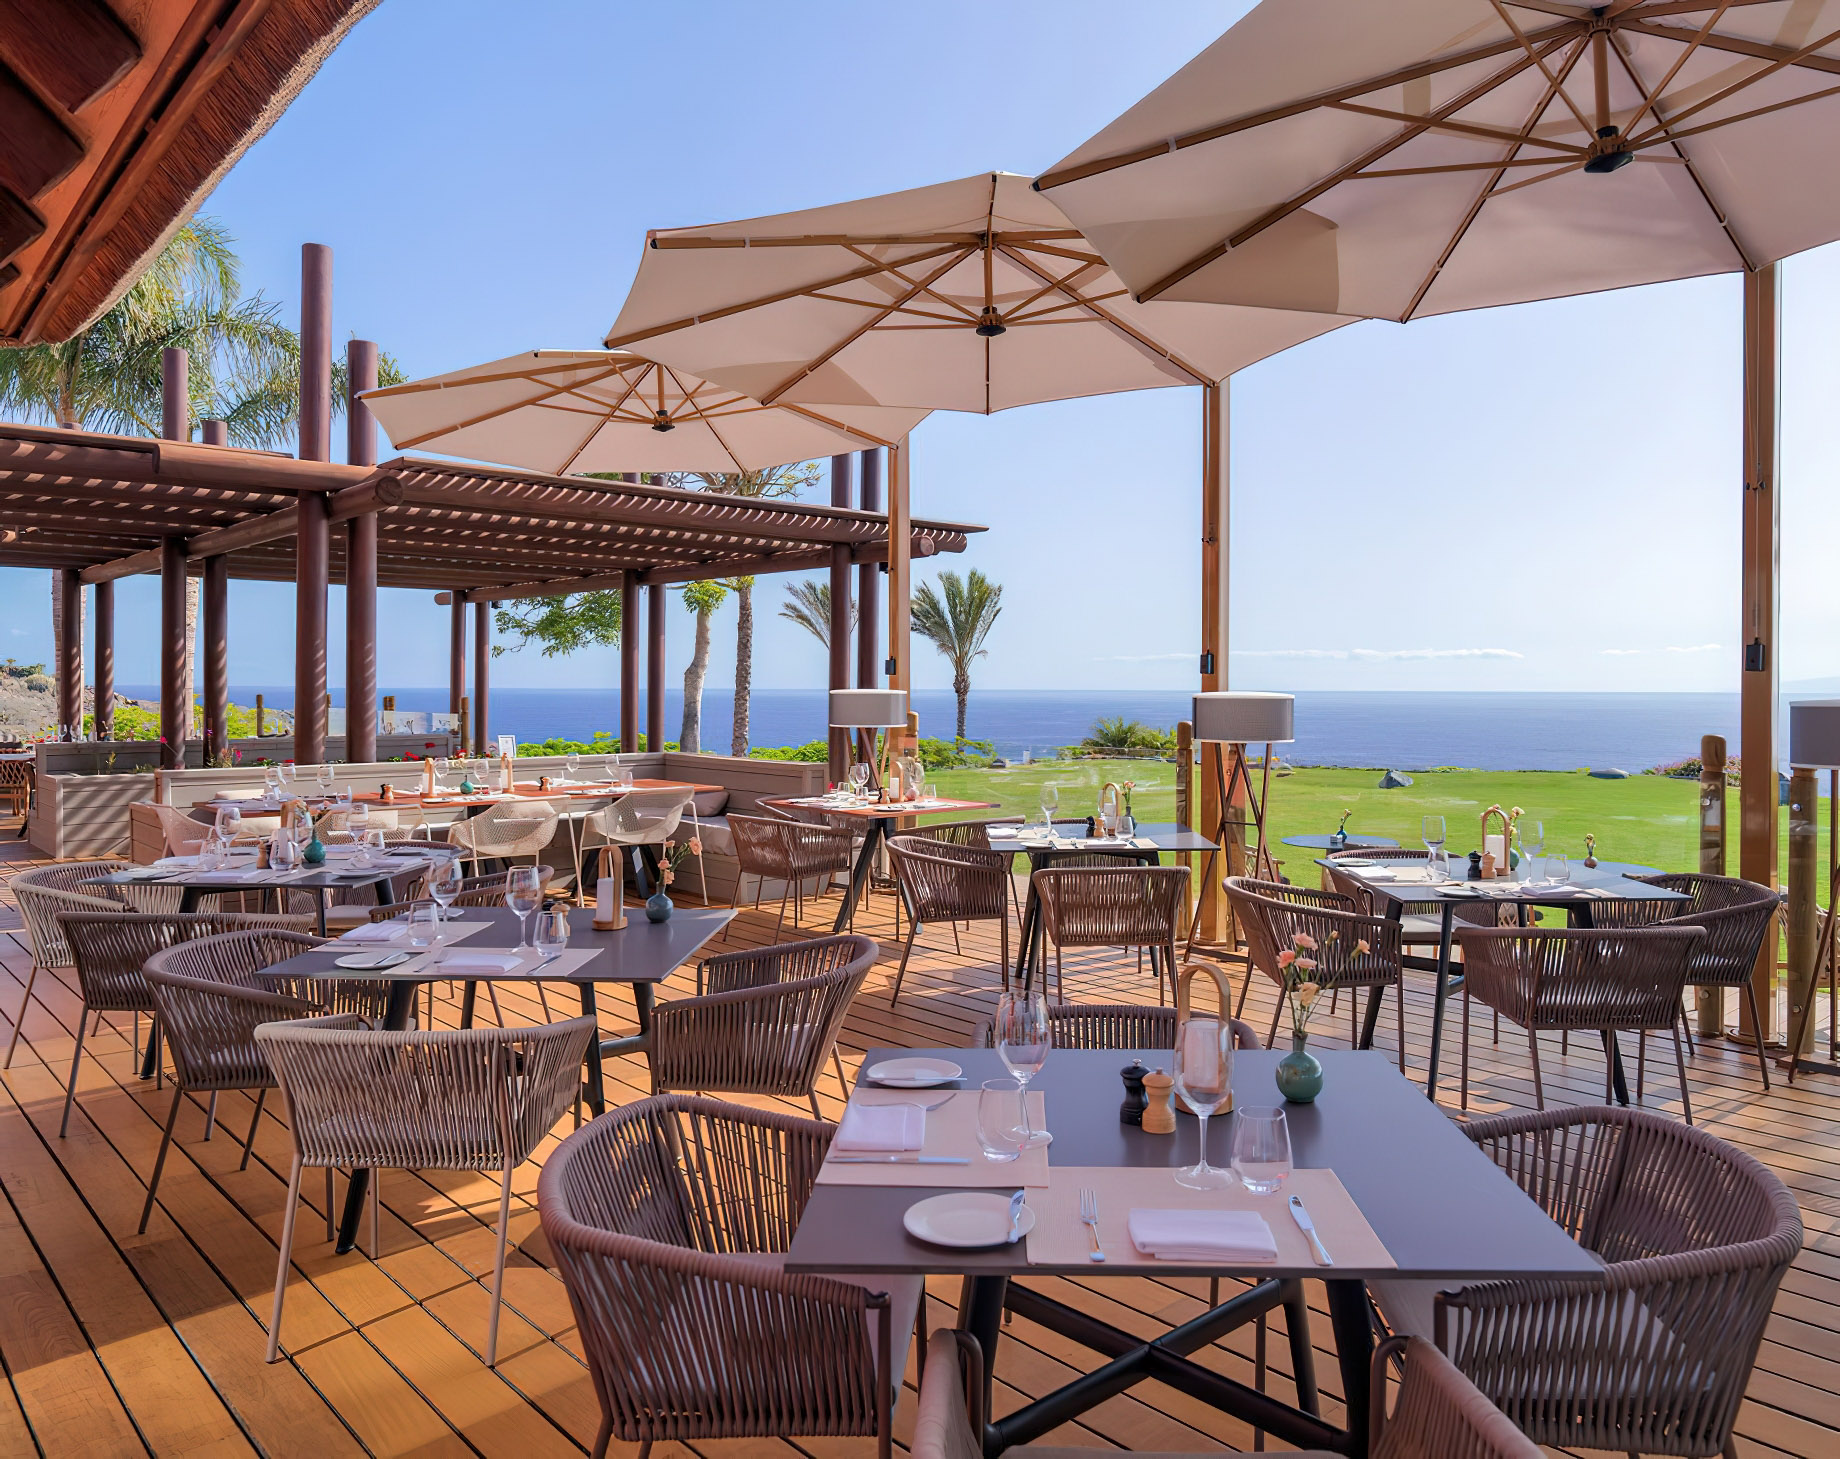 The Ritz-Carlton, Abama Resort - Santa Cruz de Tenerife, Spain - El Mirador Restaurant Patio